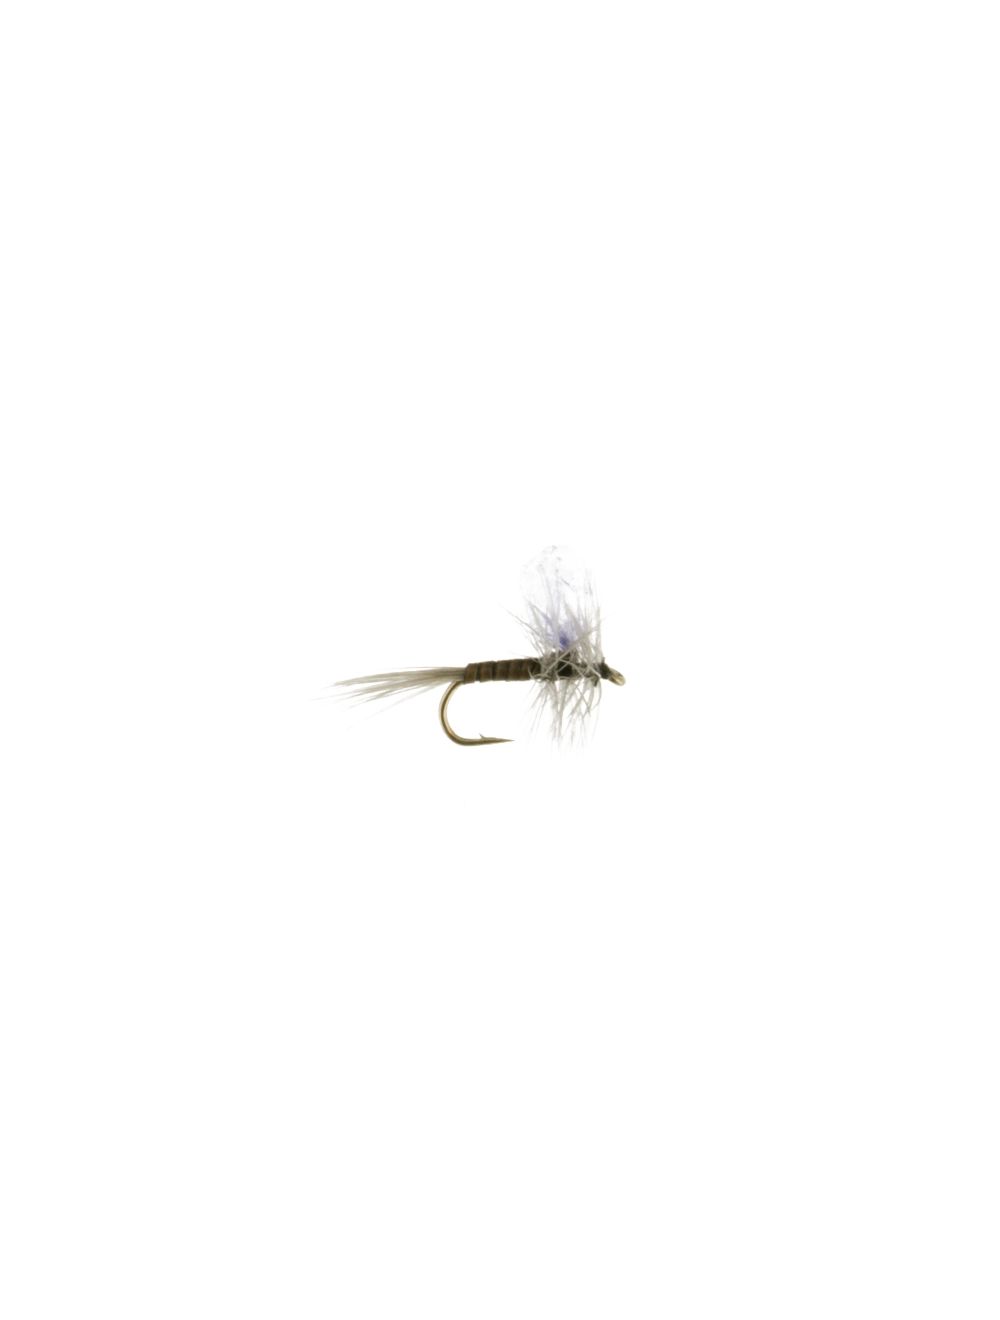 https://eadn-wc02-1020161.nxedge.io/cdn/media/catalog/product/cache/32b930e20bfef0c9badd7ee253a86131/b/a/baetis-zinger-fly-fishing-flies-dry-flies_2.jpg